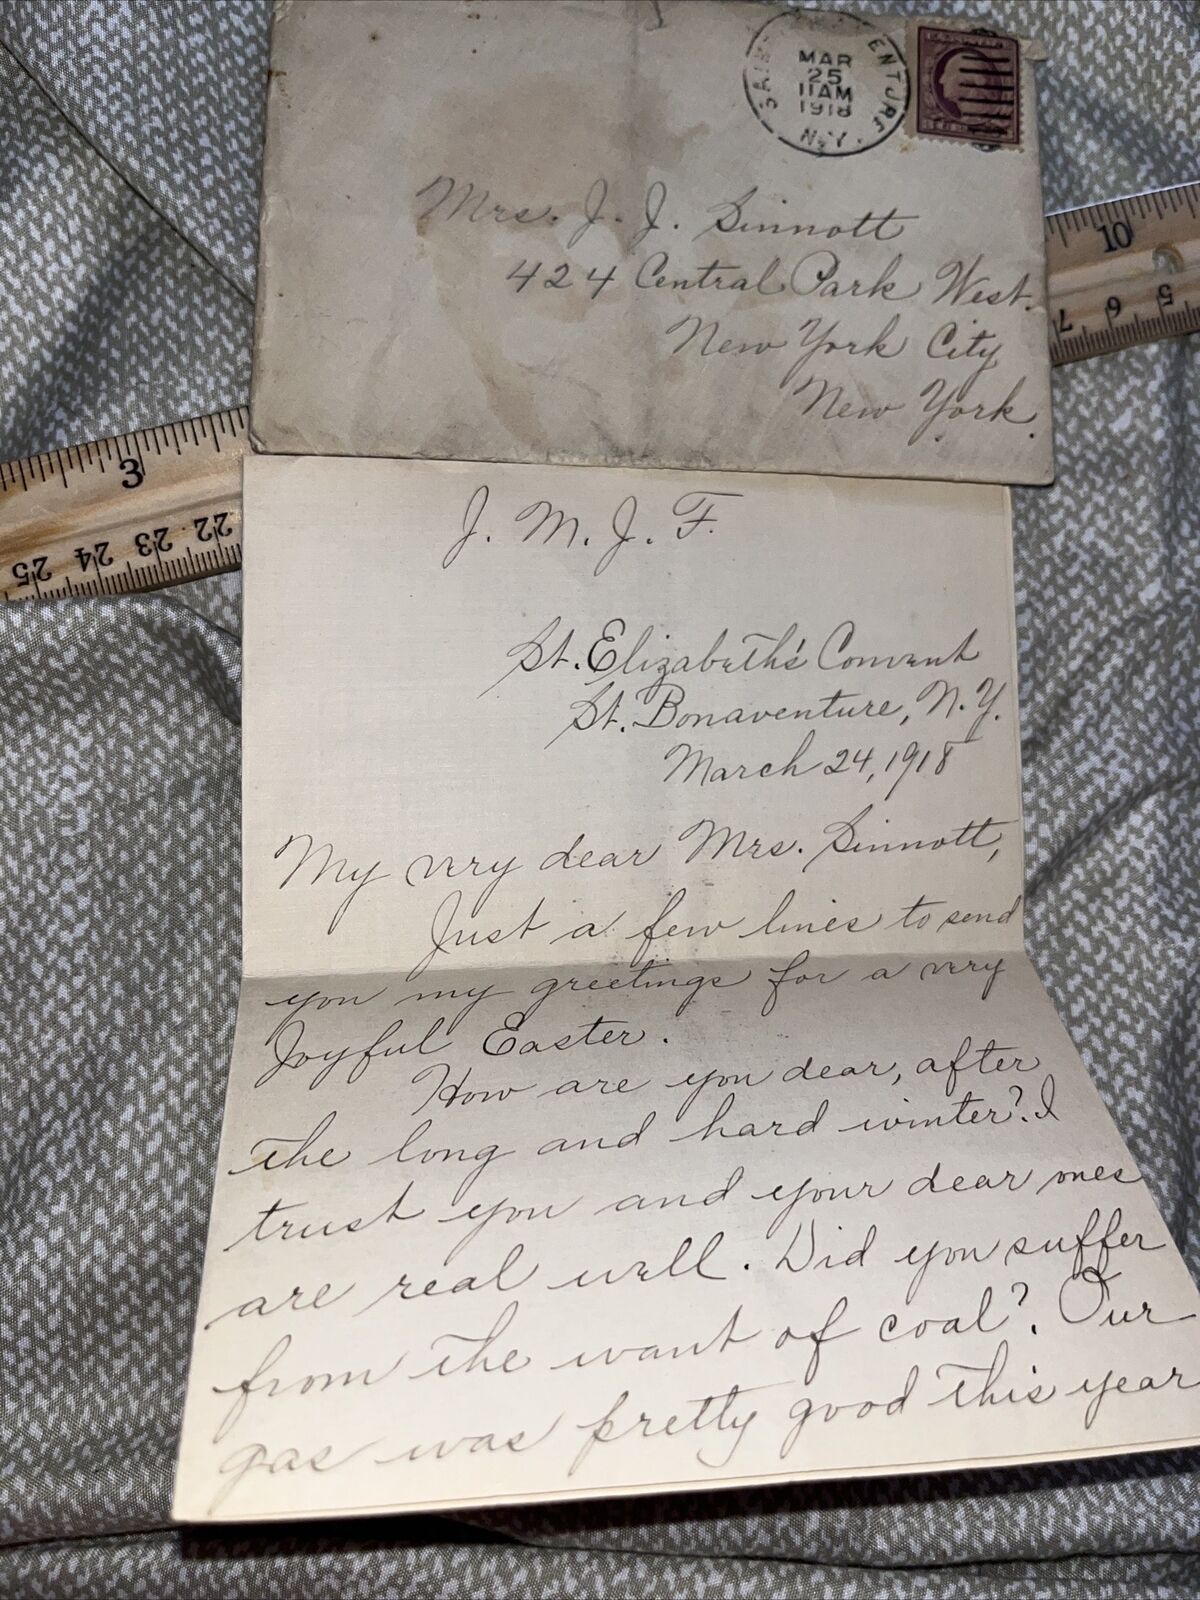 Antique 1918 Letter from St Elizabeth’s Convent / St Bonaventure NY - Holy Week